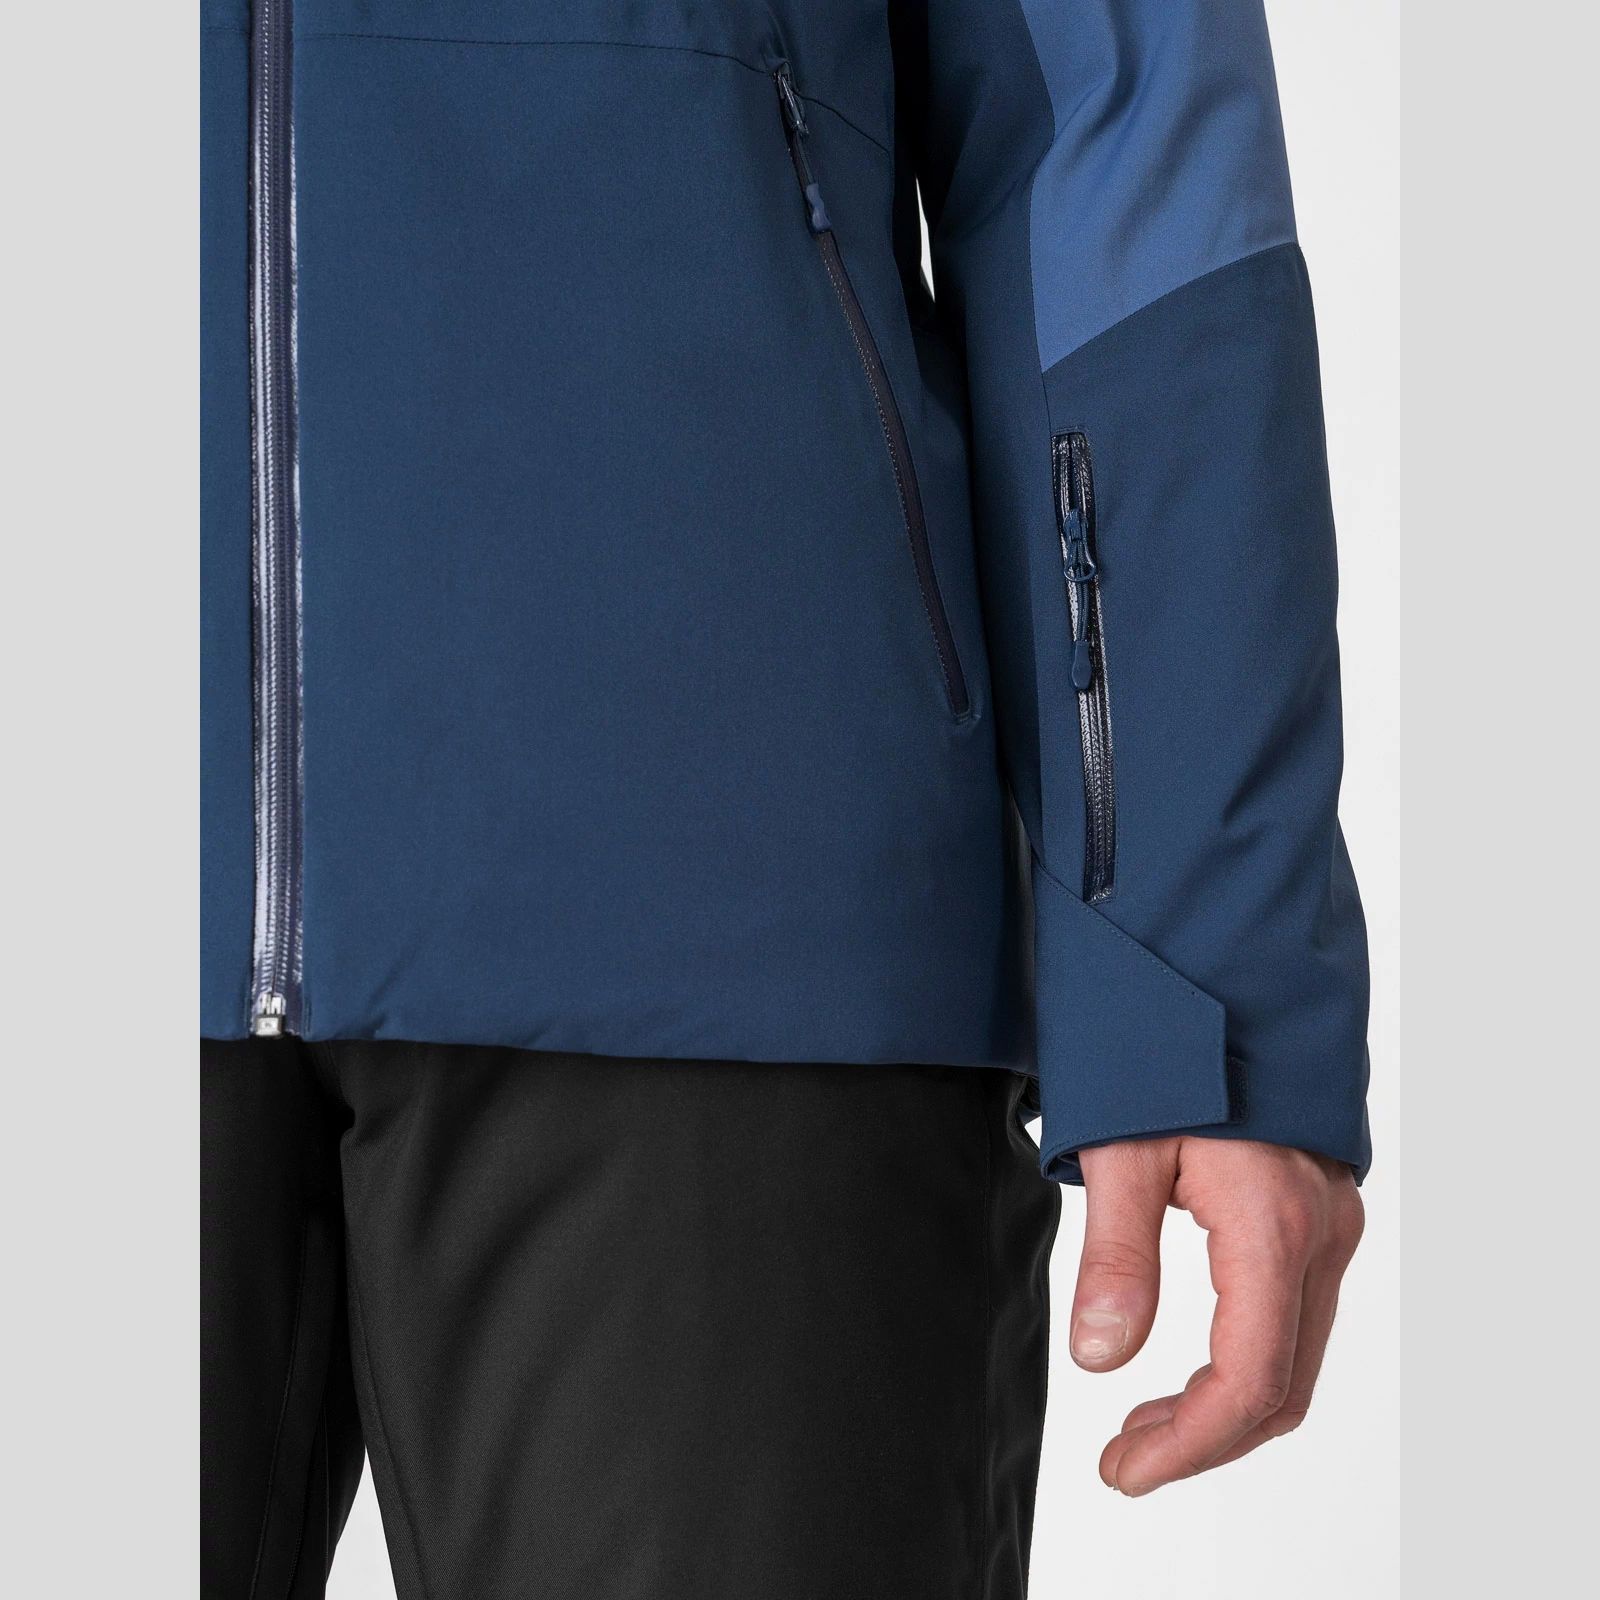  Ski & Snow Jackets -  4f Men ski jacket KUMN010